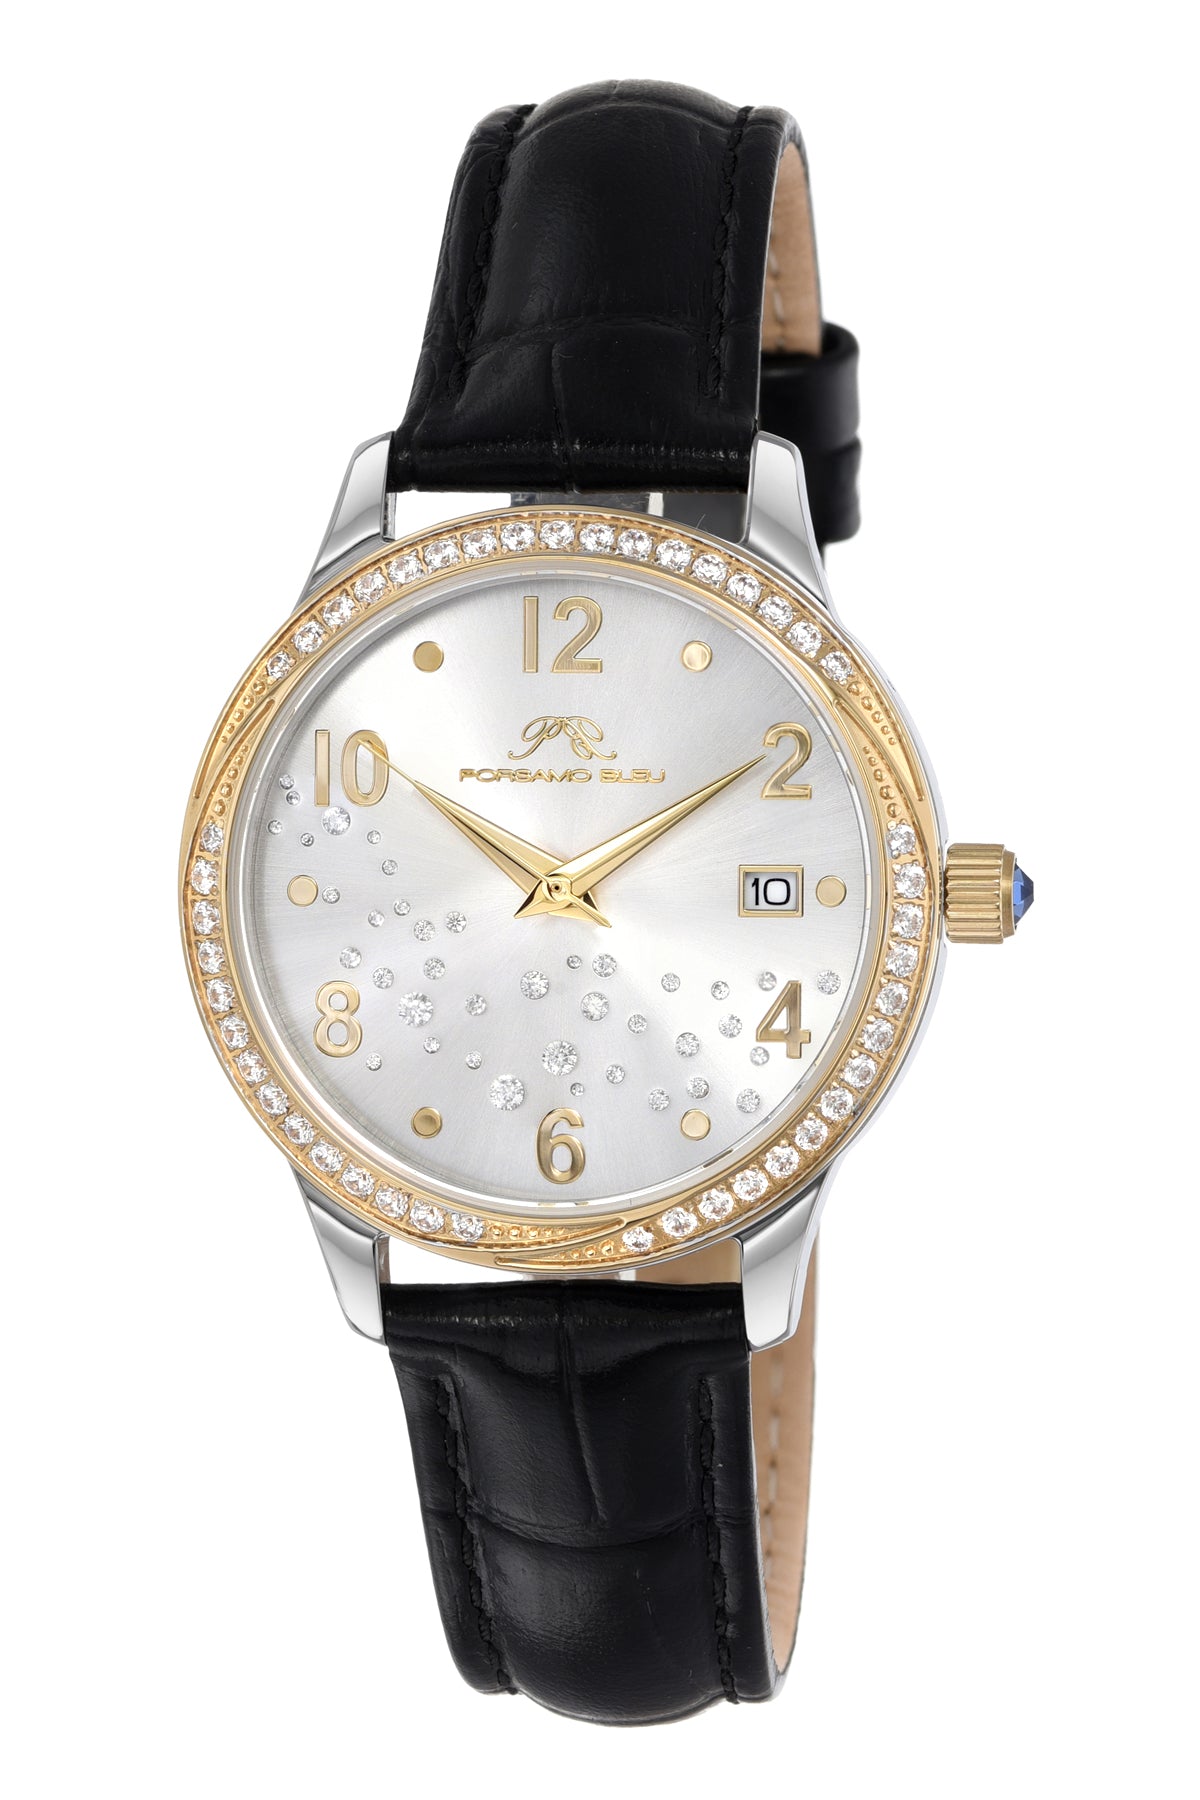 Porsamo Bleu Ruby Luxury Women's Genuine Leather Band Watch, Gold, Black 1141BRUL